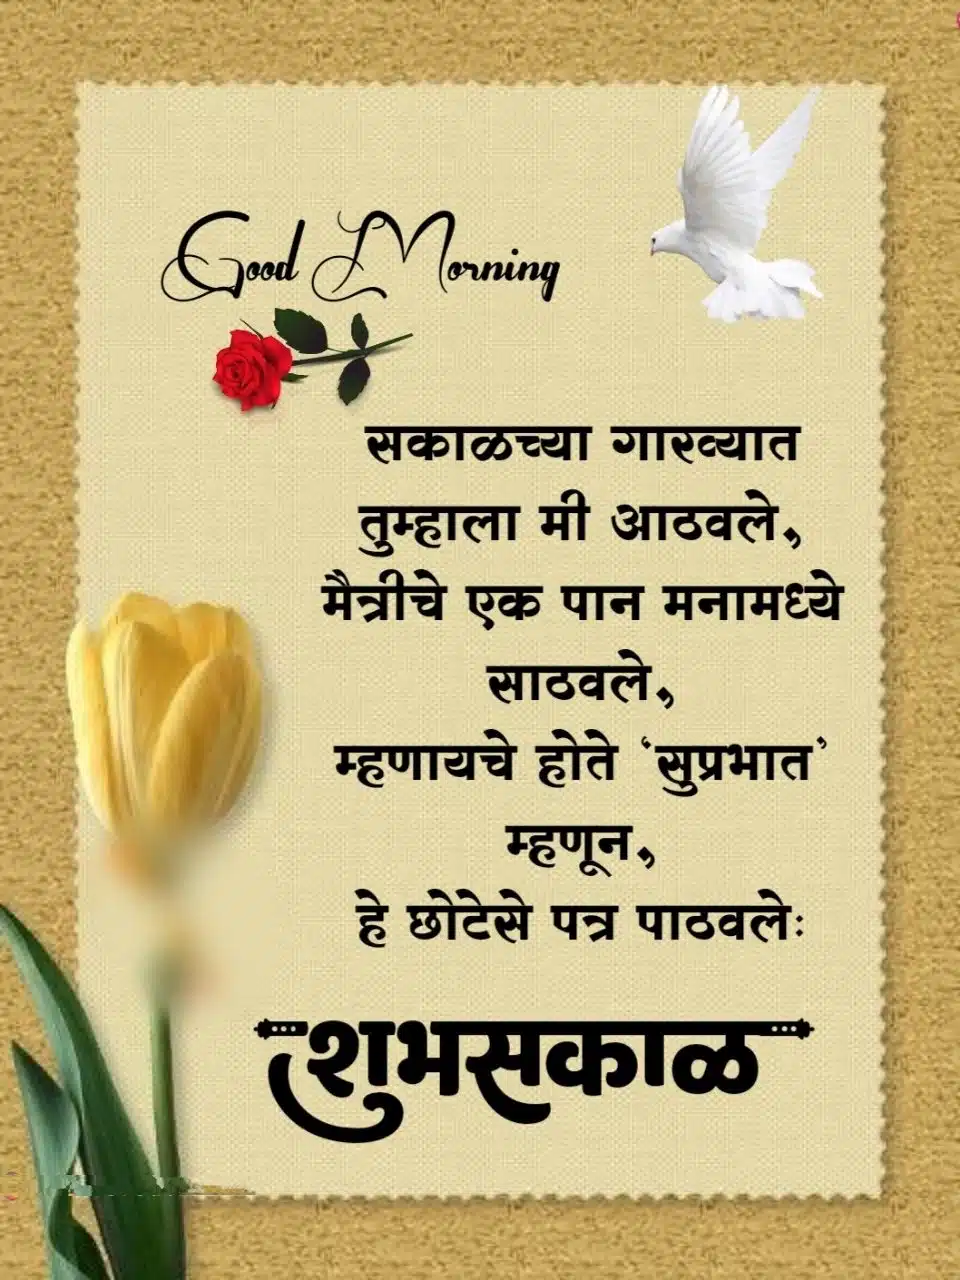 Good Morning Quotes Marathi Friend